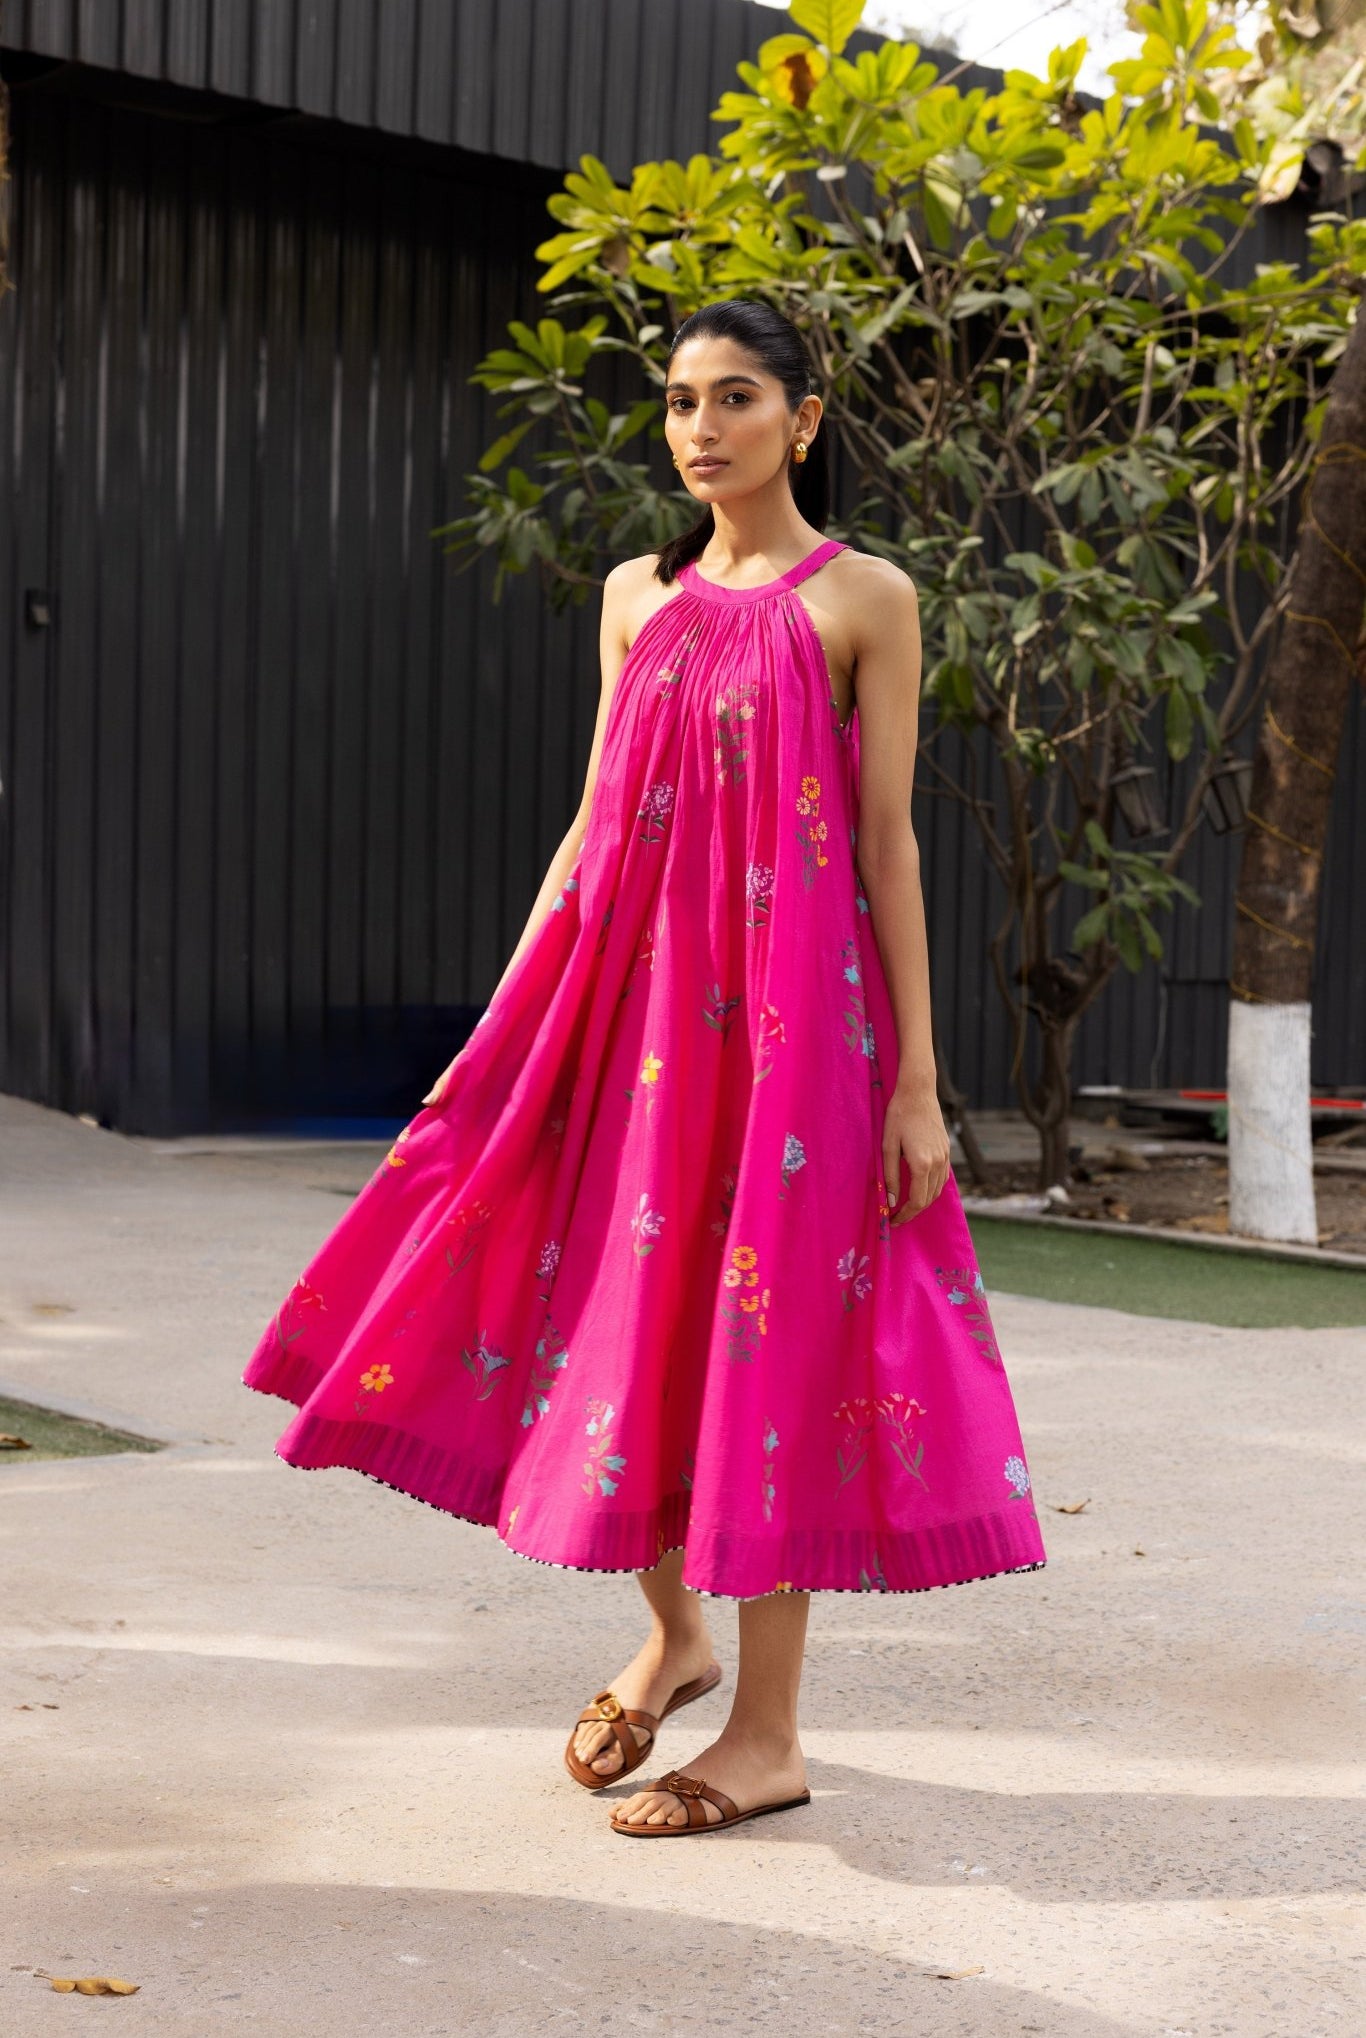 Camellia Dress - CiceroniJacket, DressLabel Shreya Sharma